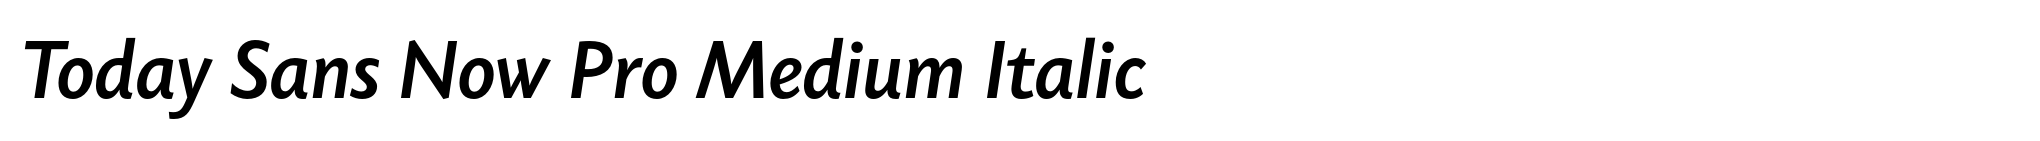 Today Sans Now Pro Medium Italic image